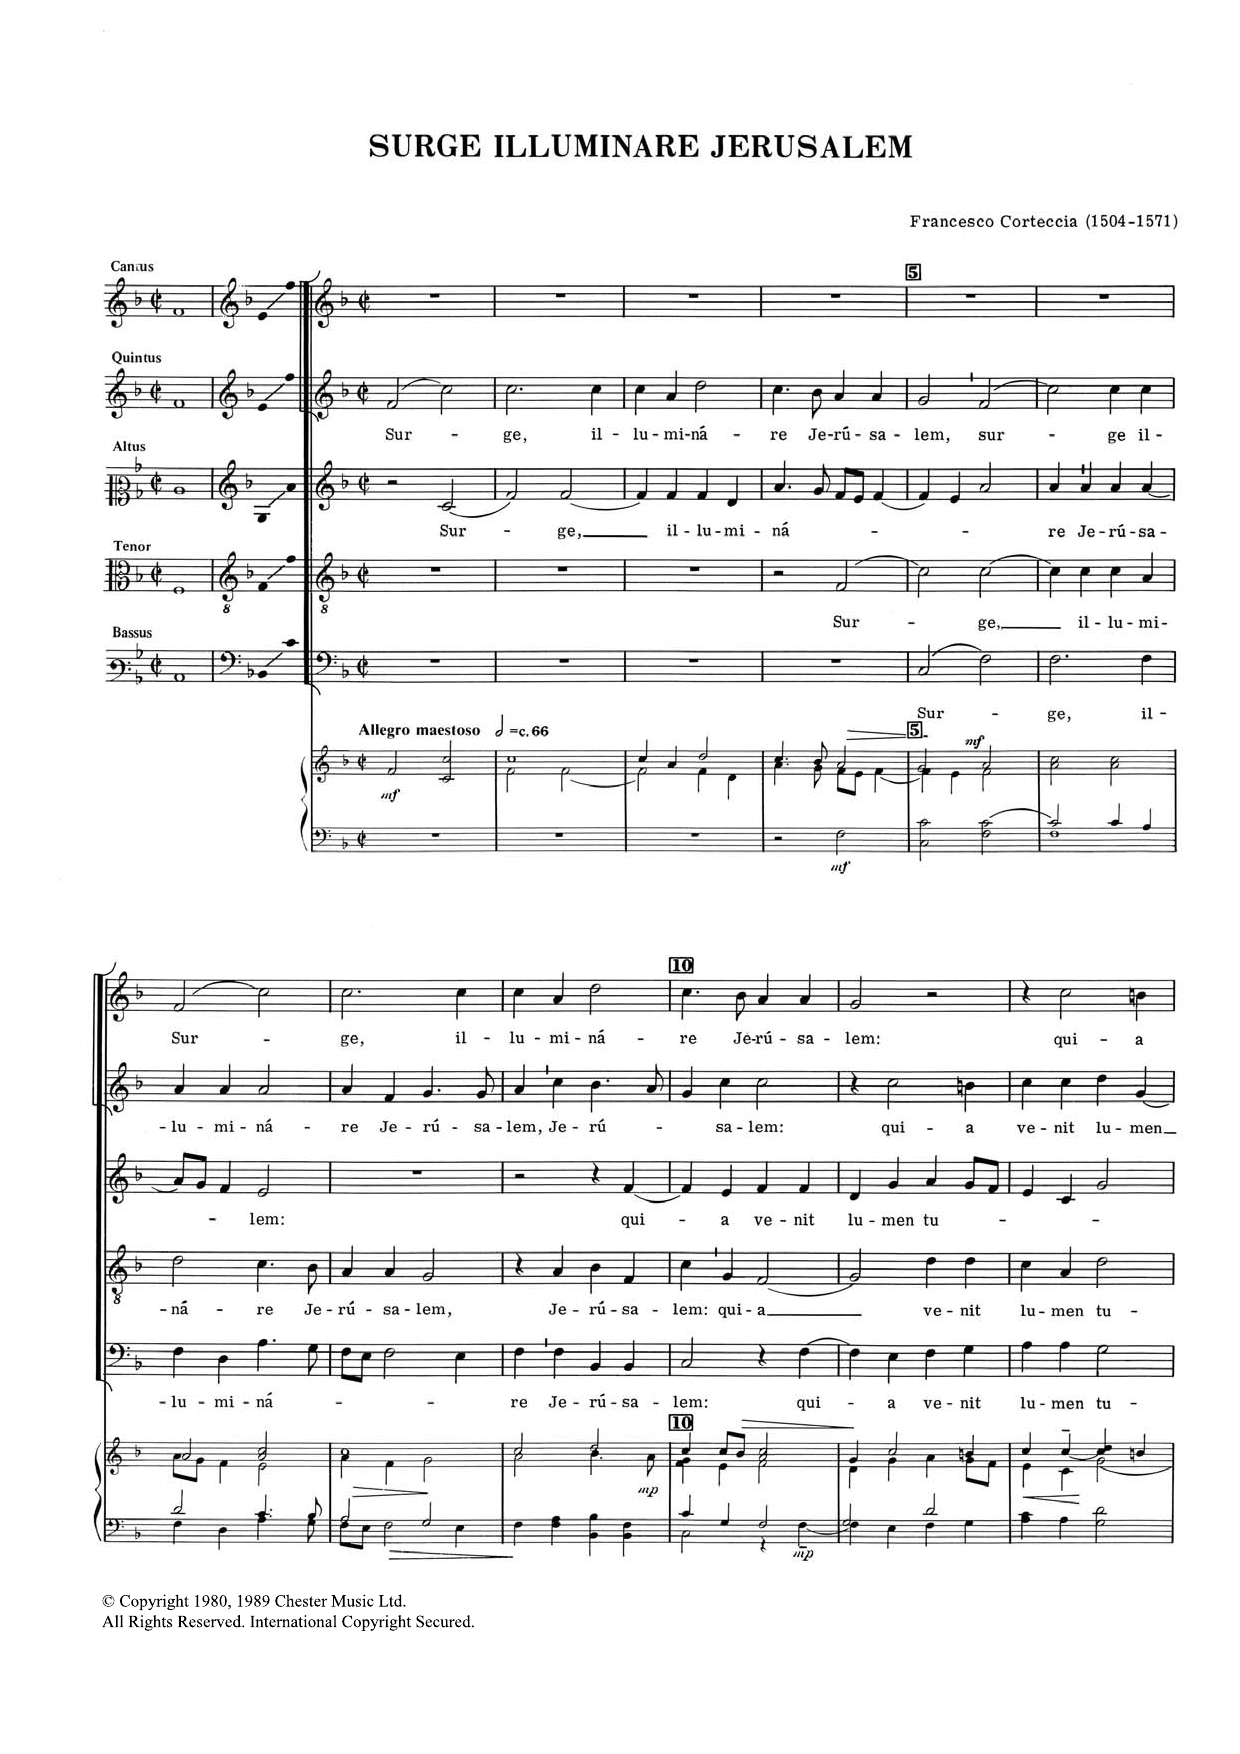 Francesco Corteccia Surge Illuminare Jerusalem sheet music notes and chords arranged for SATB Choir